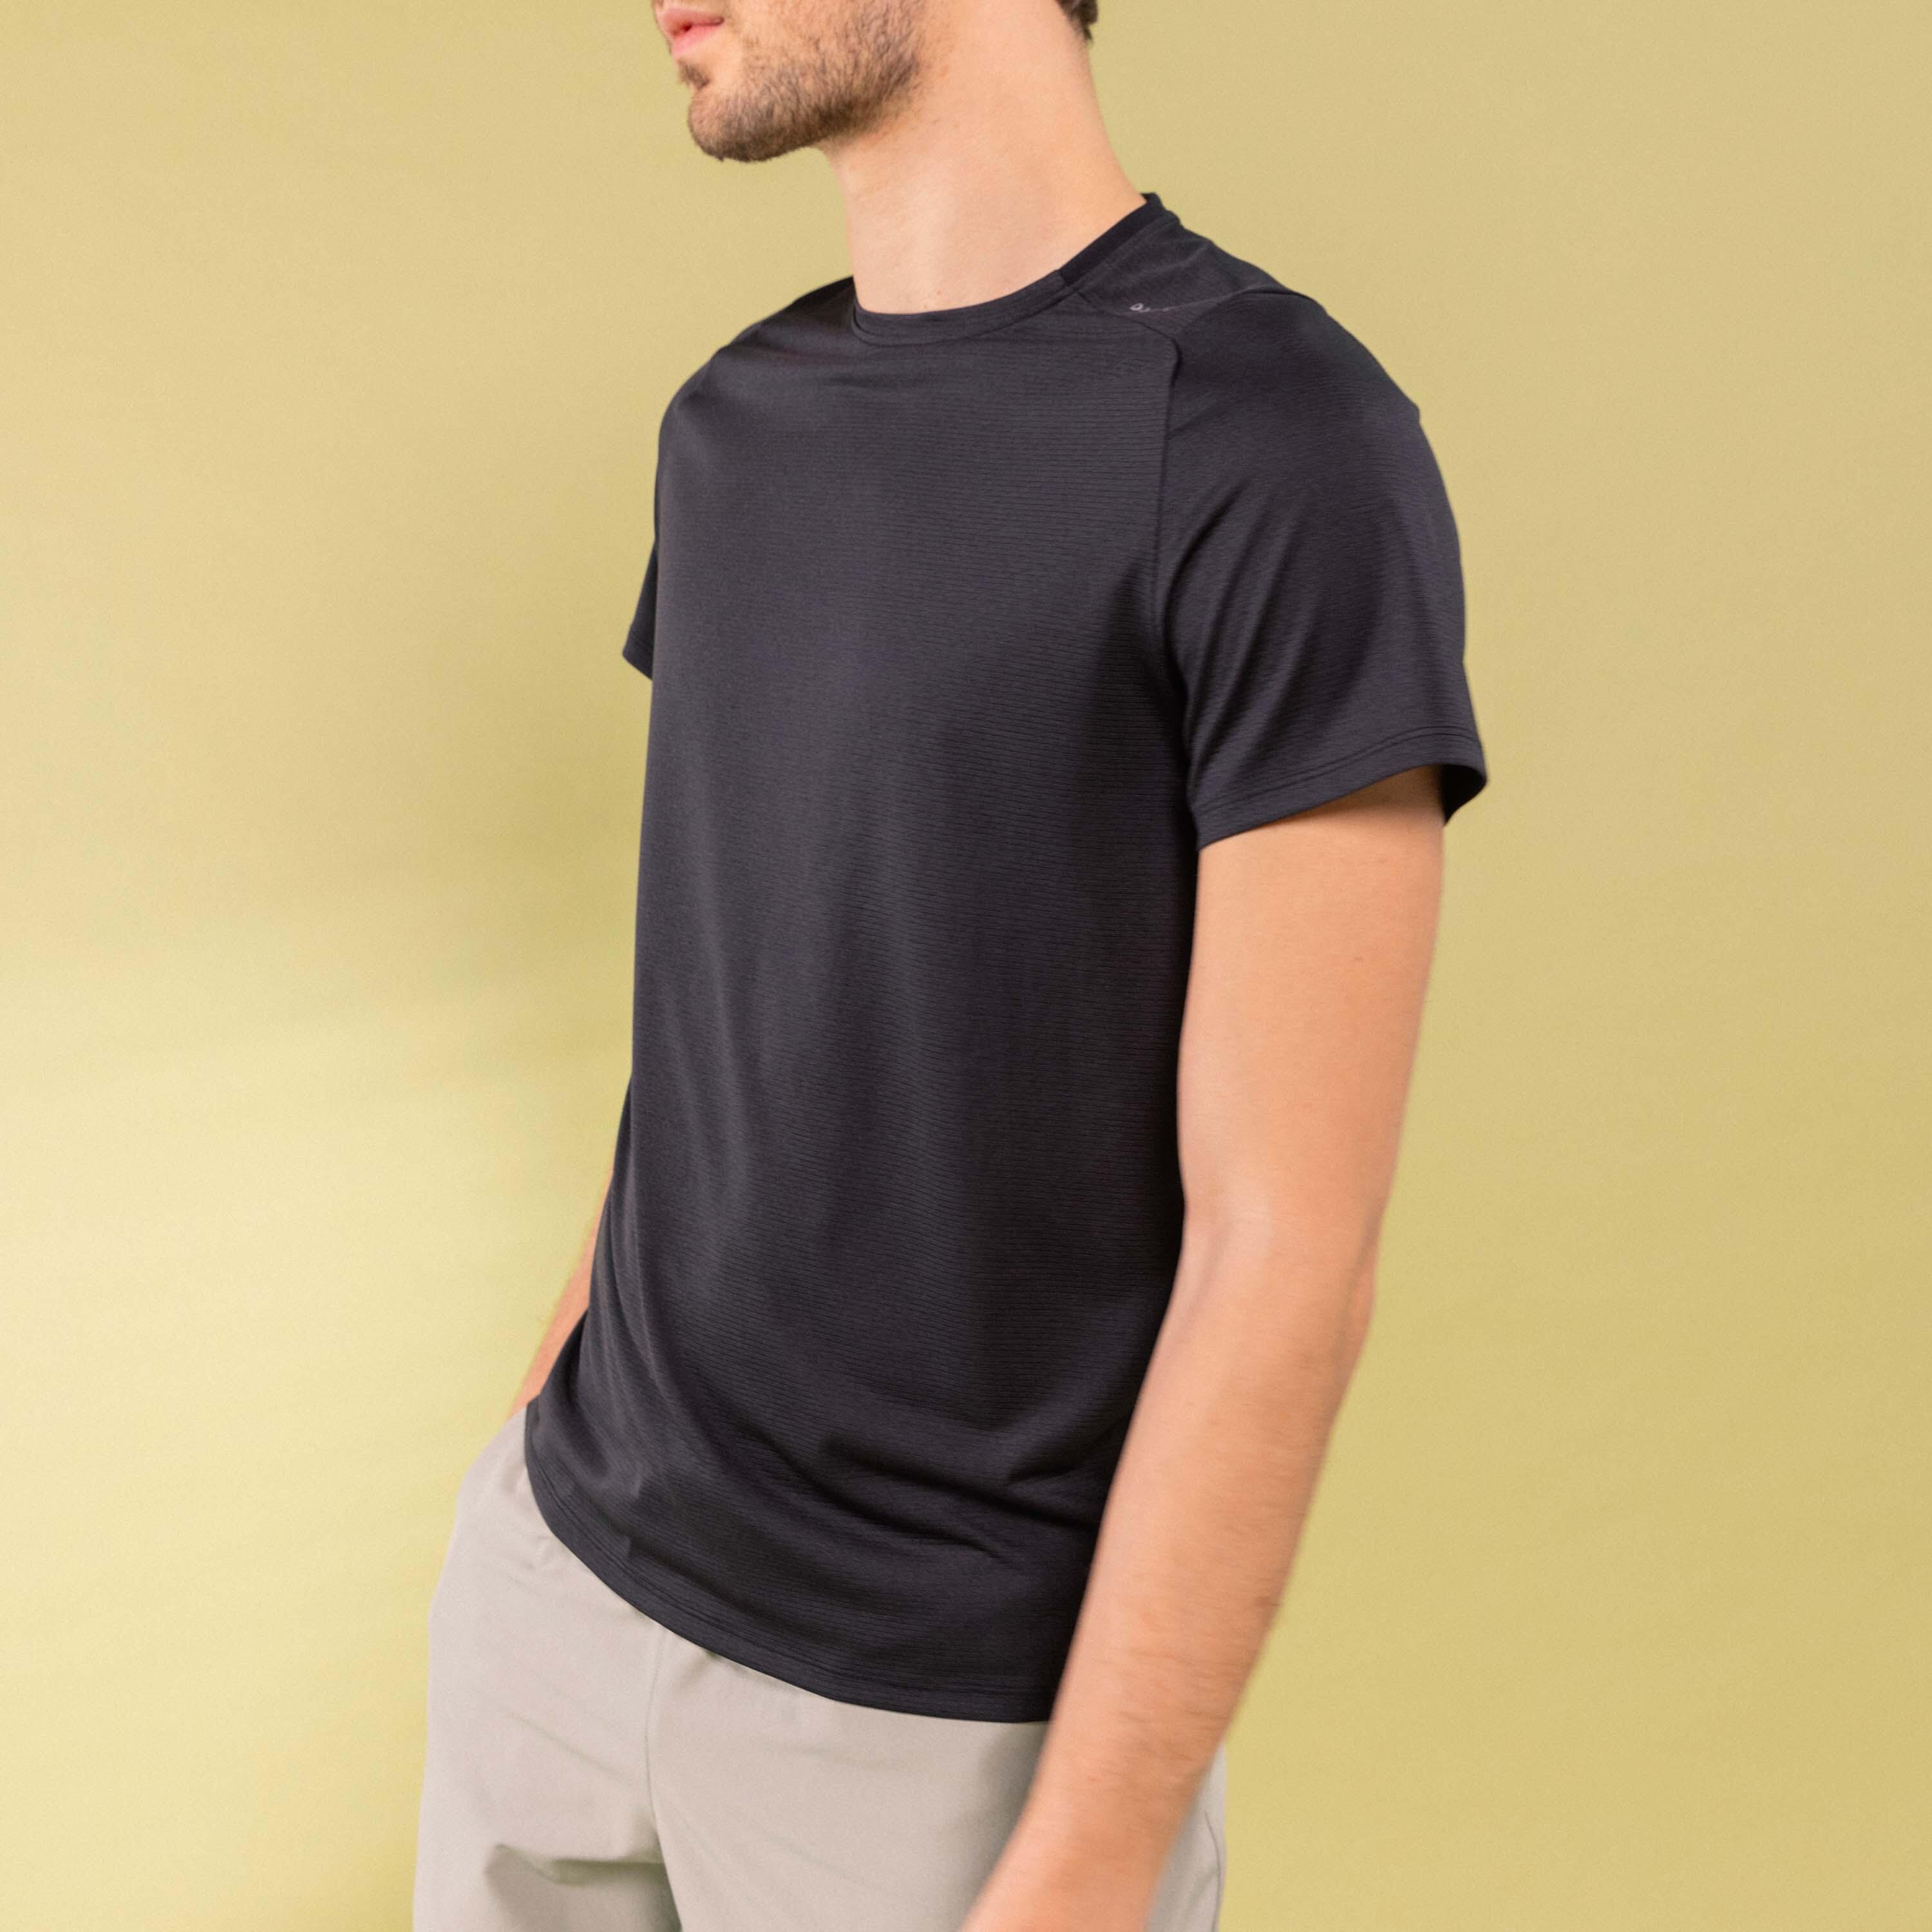 Men's Crew Neck Breathable Fitness T-Shirt - Black 2/7